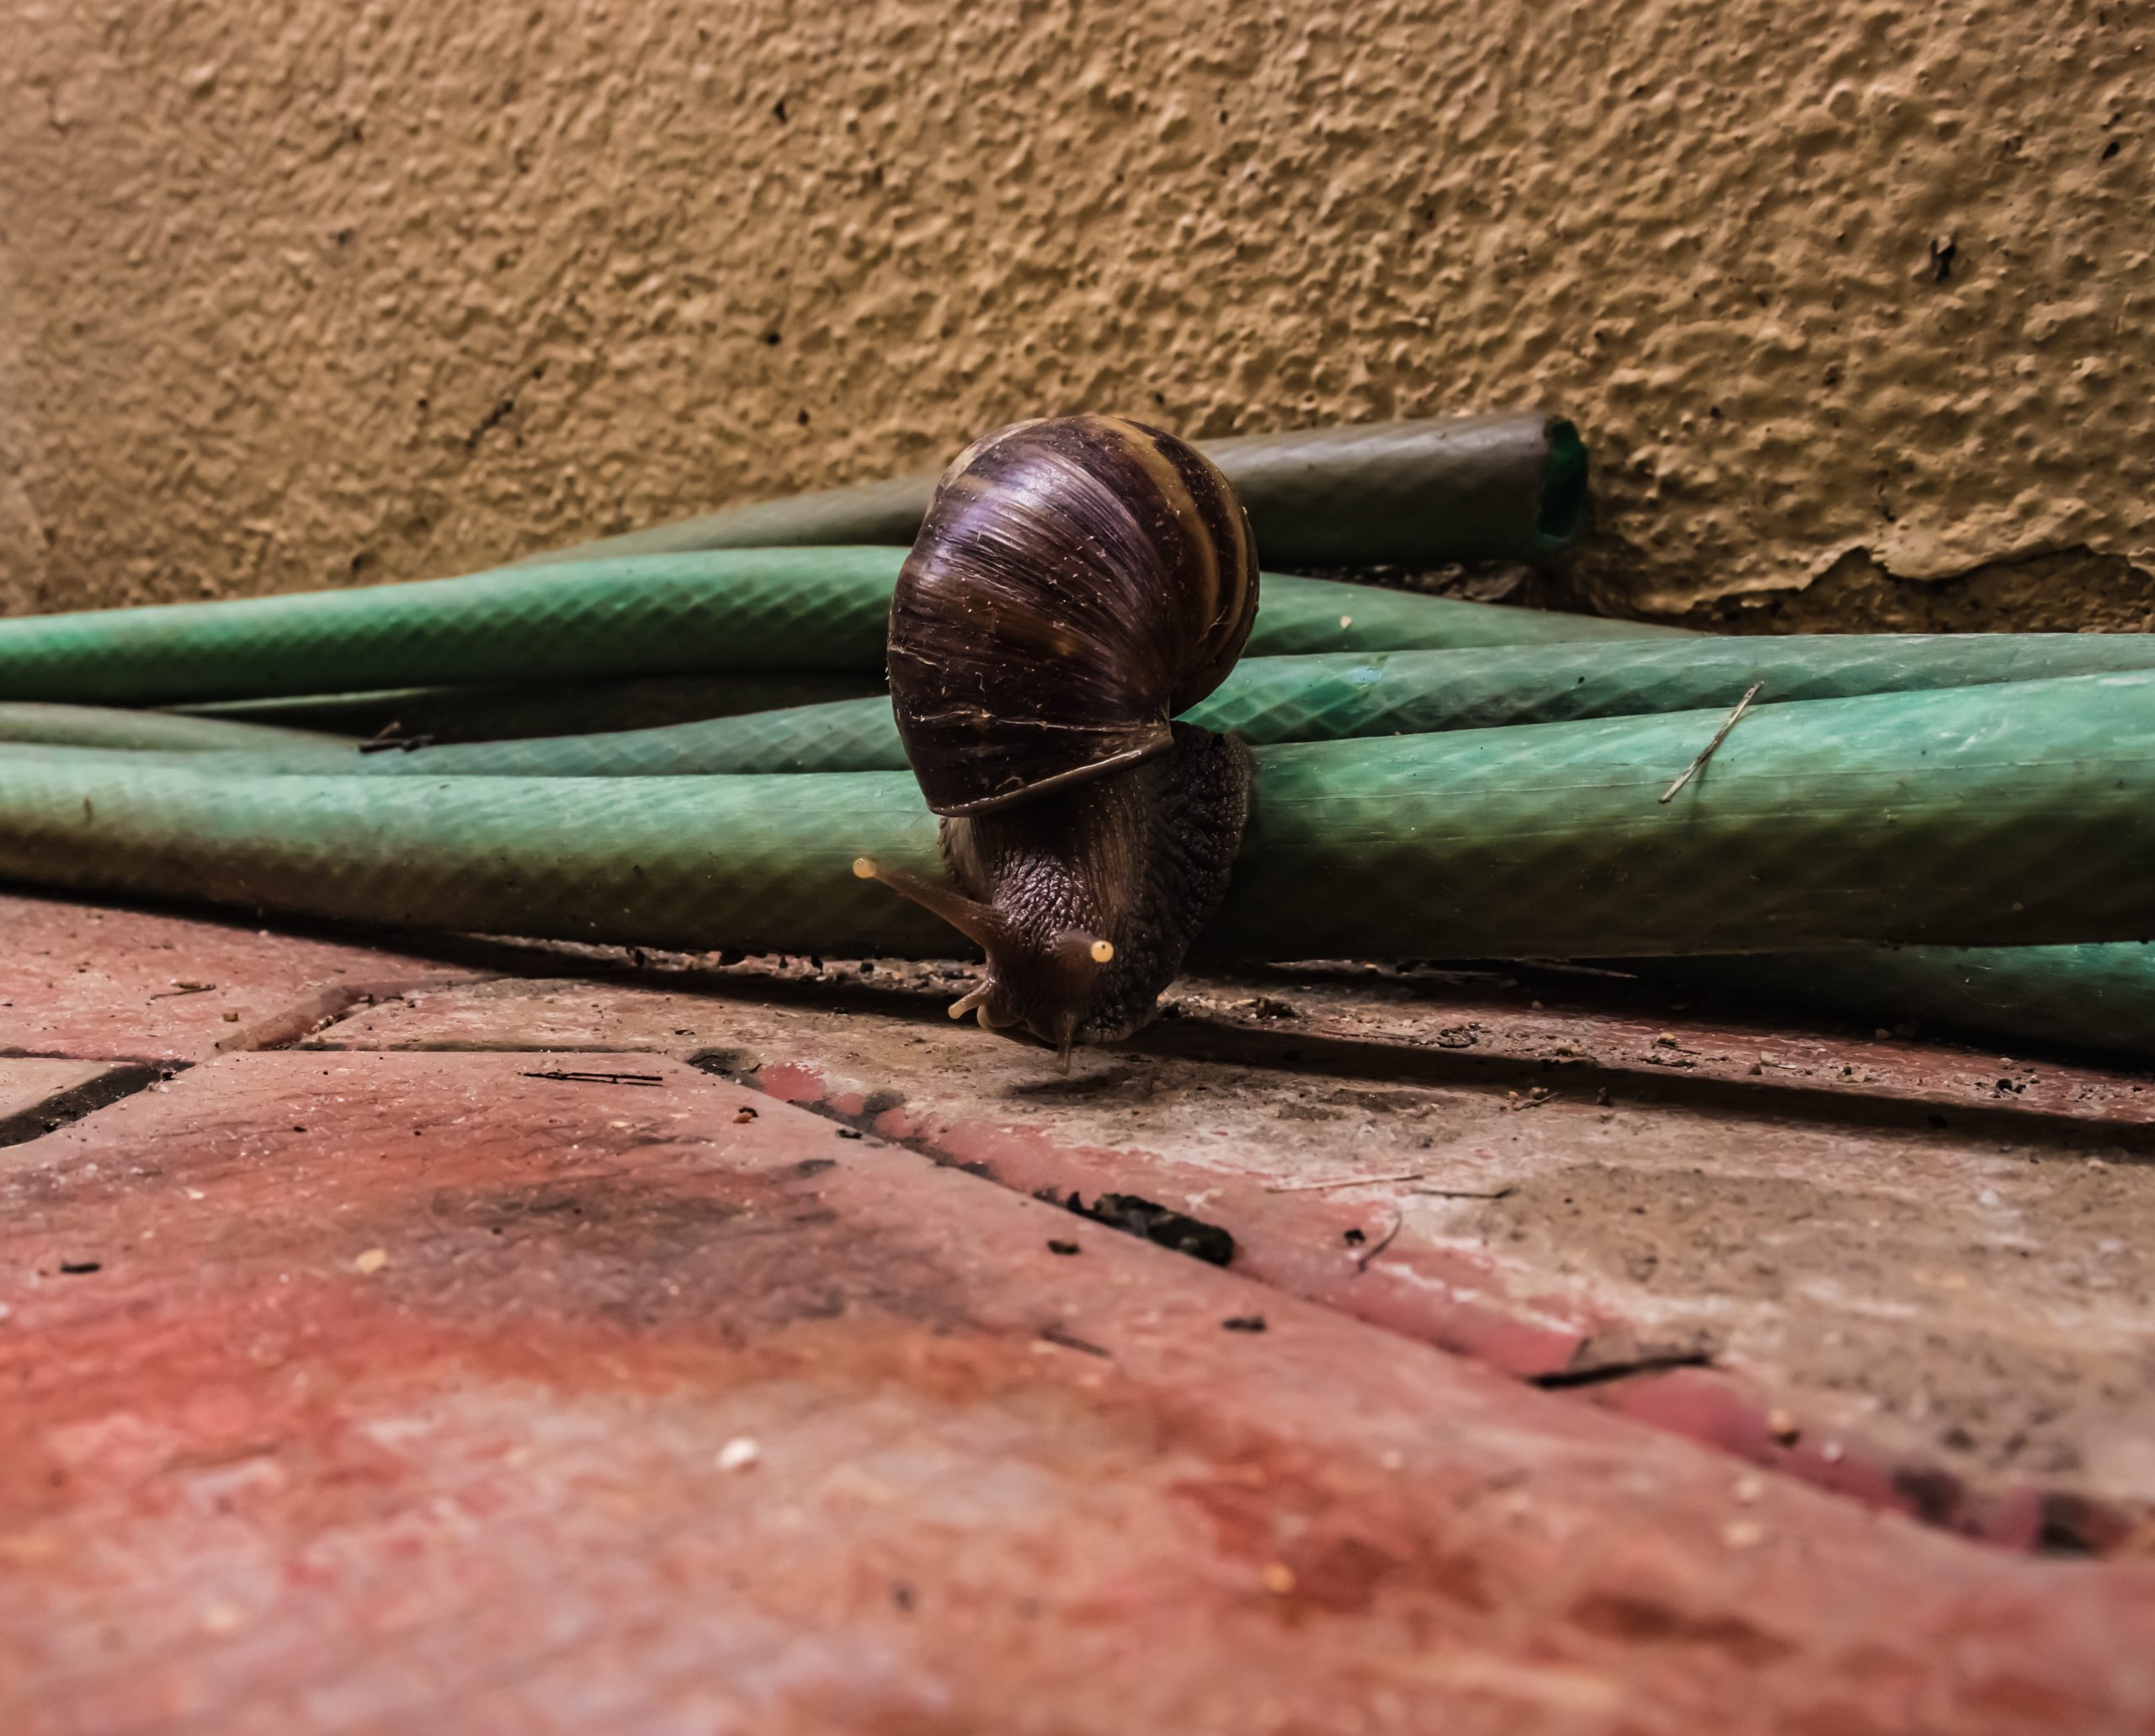 A snail on a wire